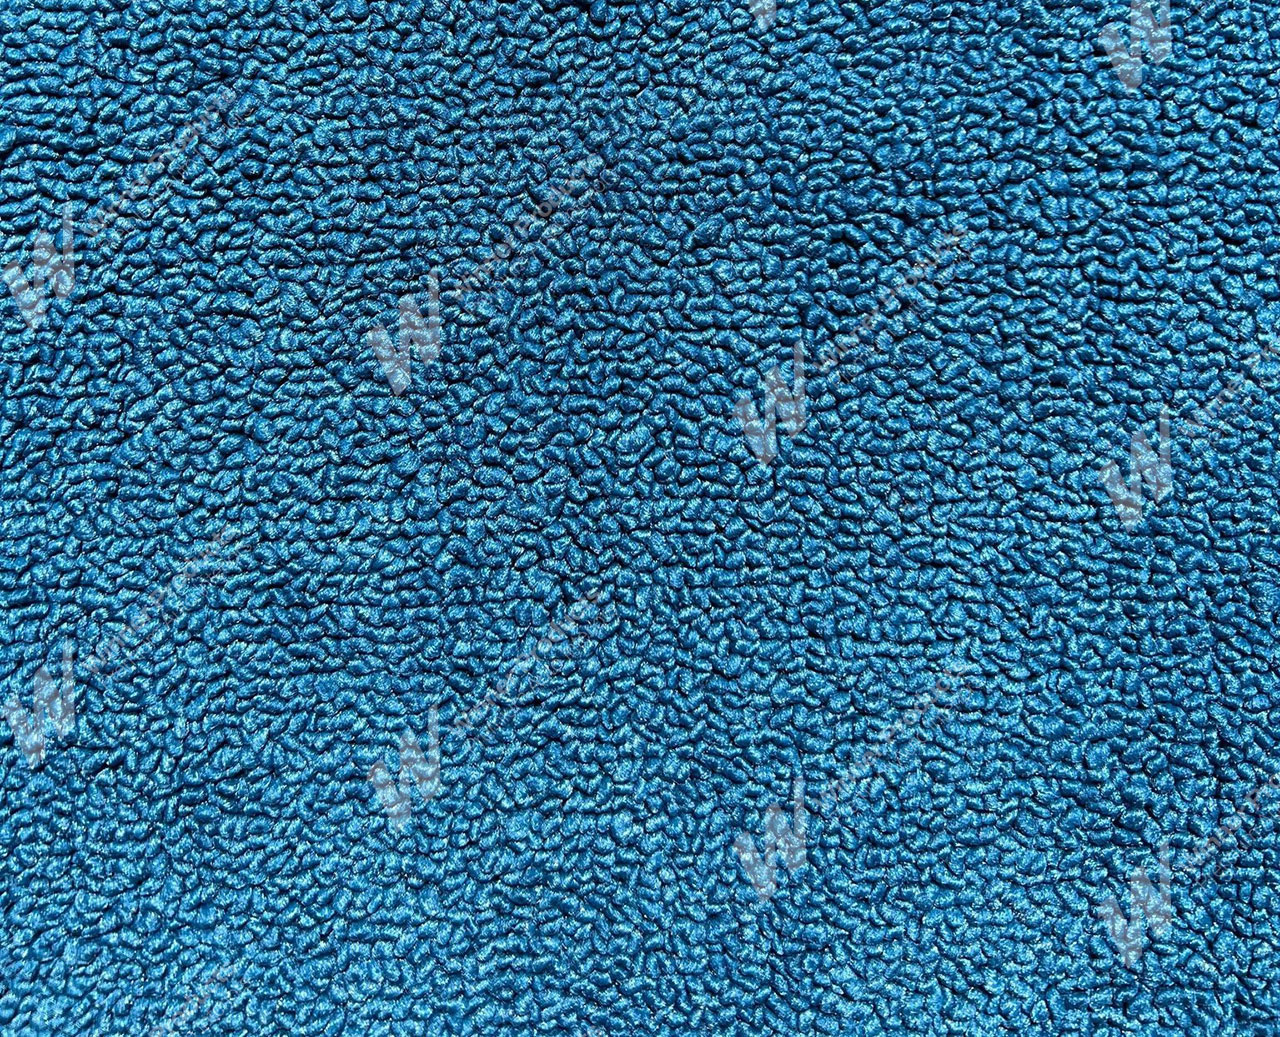 Holden Premier HG Premier Wagon 14R Twilight Blue Carpet (Image 1 of 1)